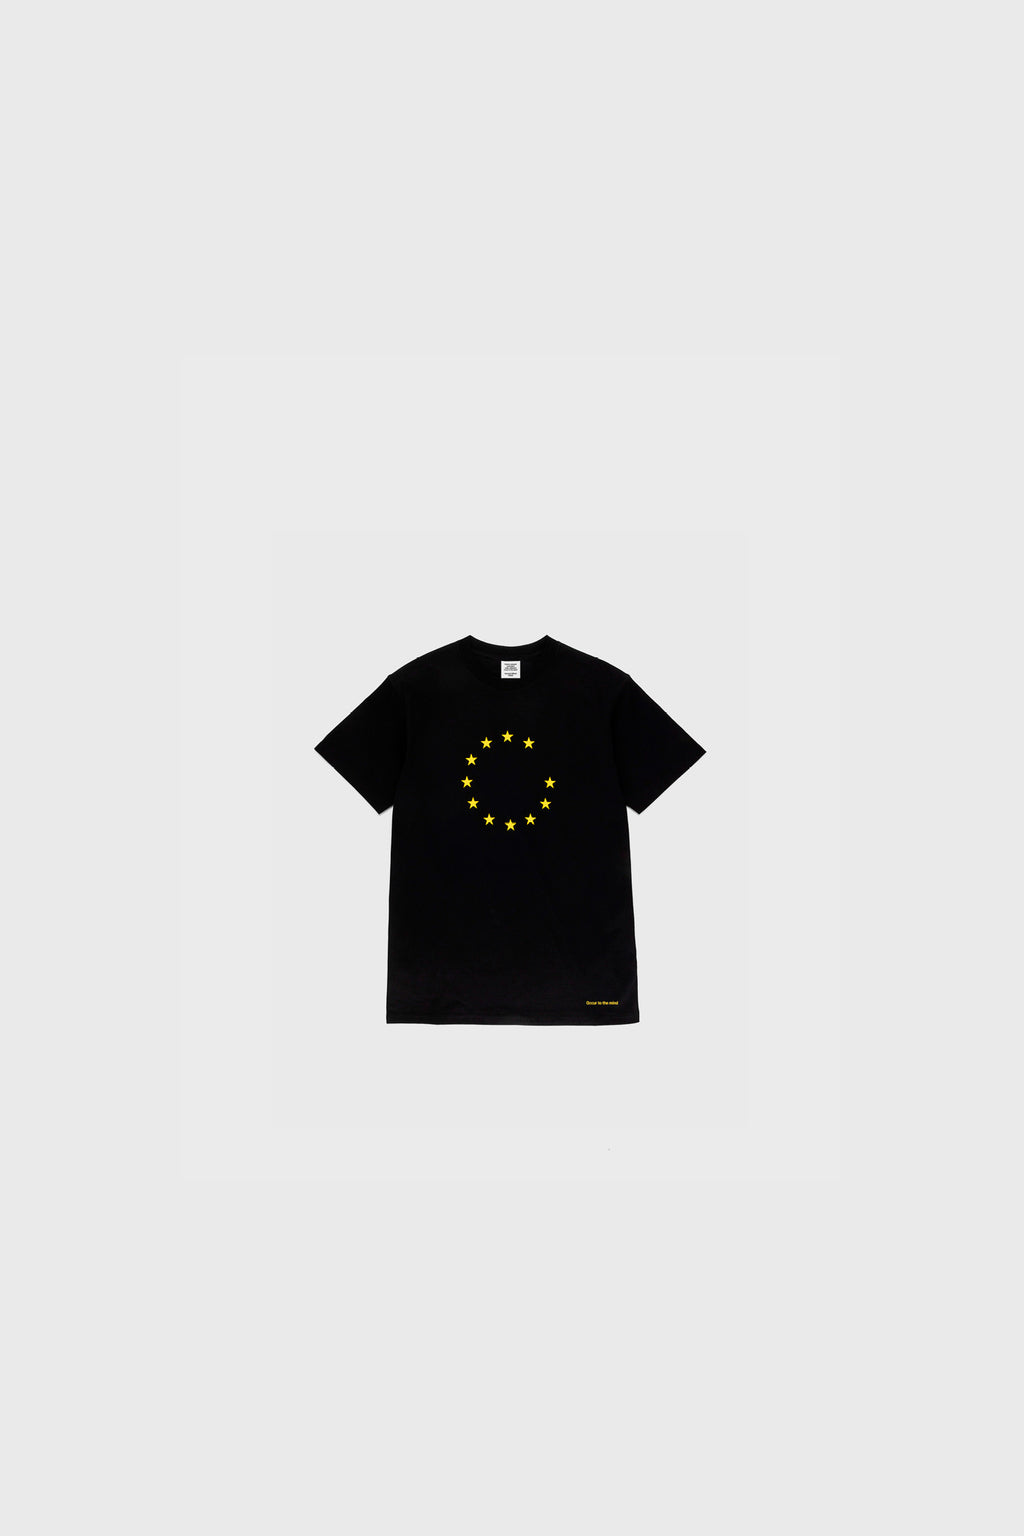 Eunify T-Shirt Black